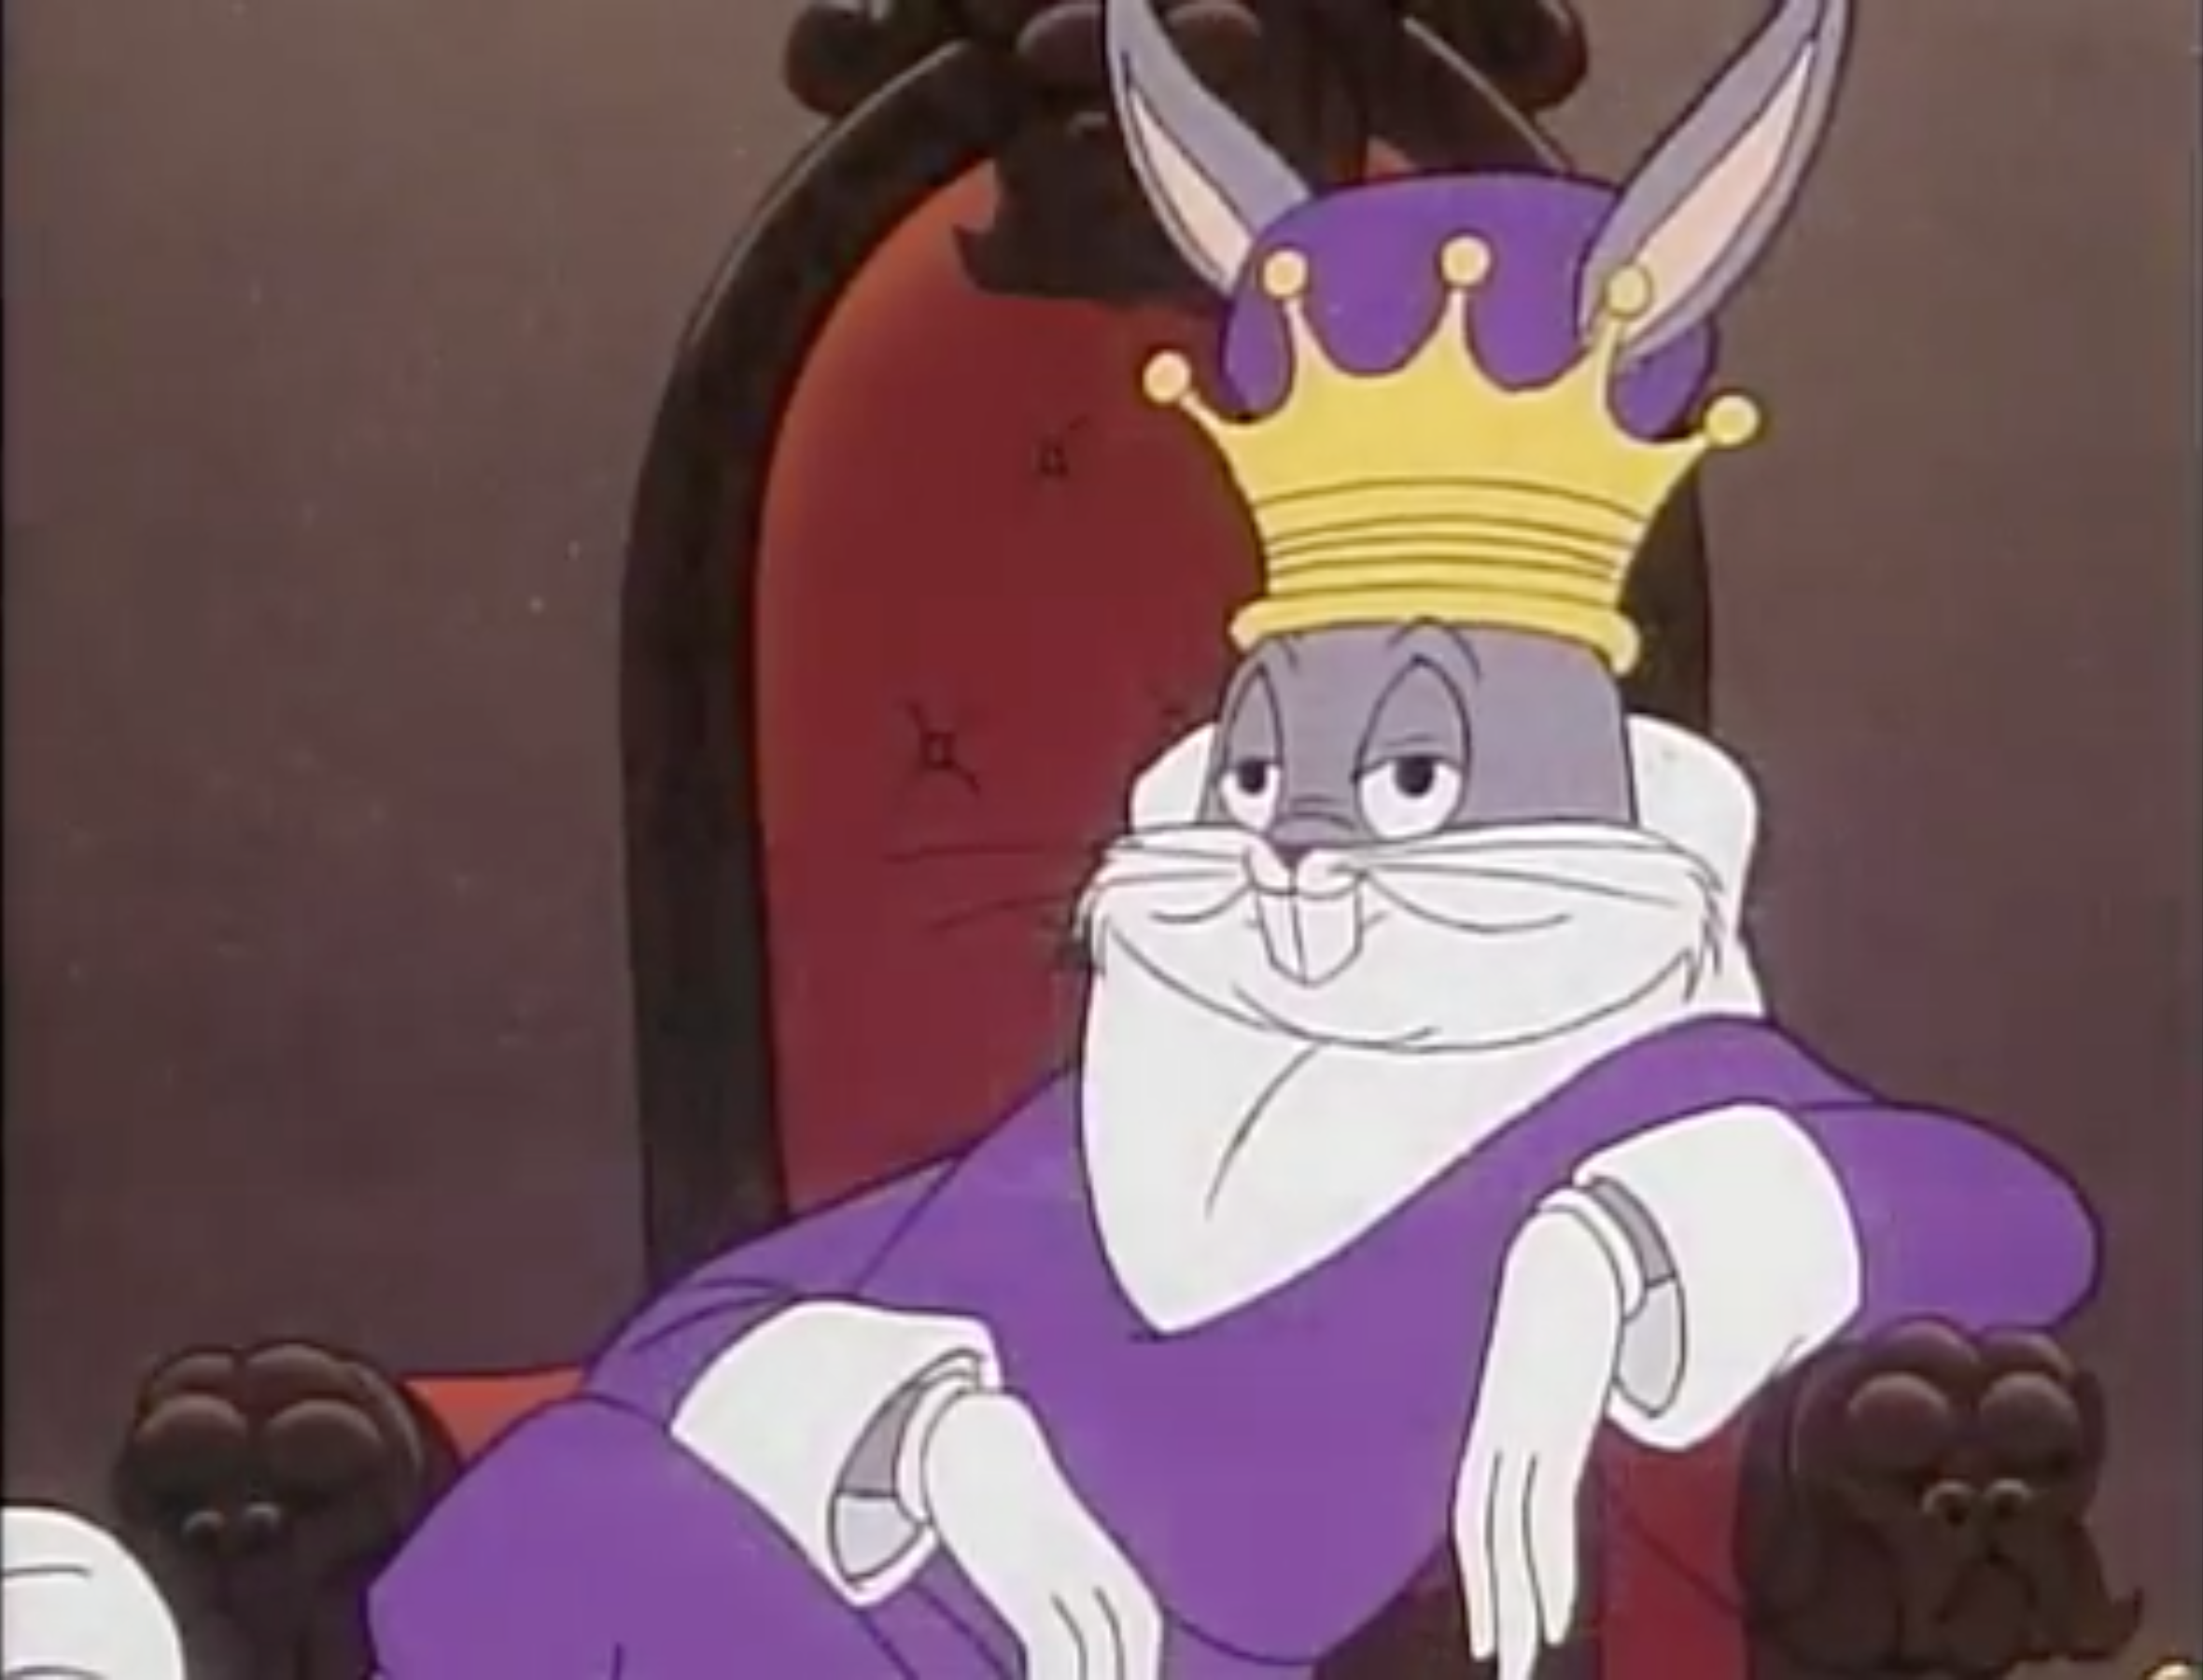 King Bugs Bunny - Bugs Bunny in King Arthur's Court - Looney Tunes Photo  (43271752) - Fanpop